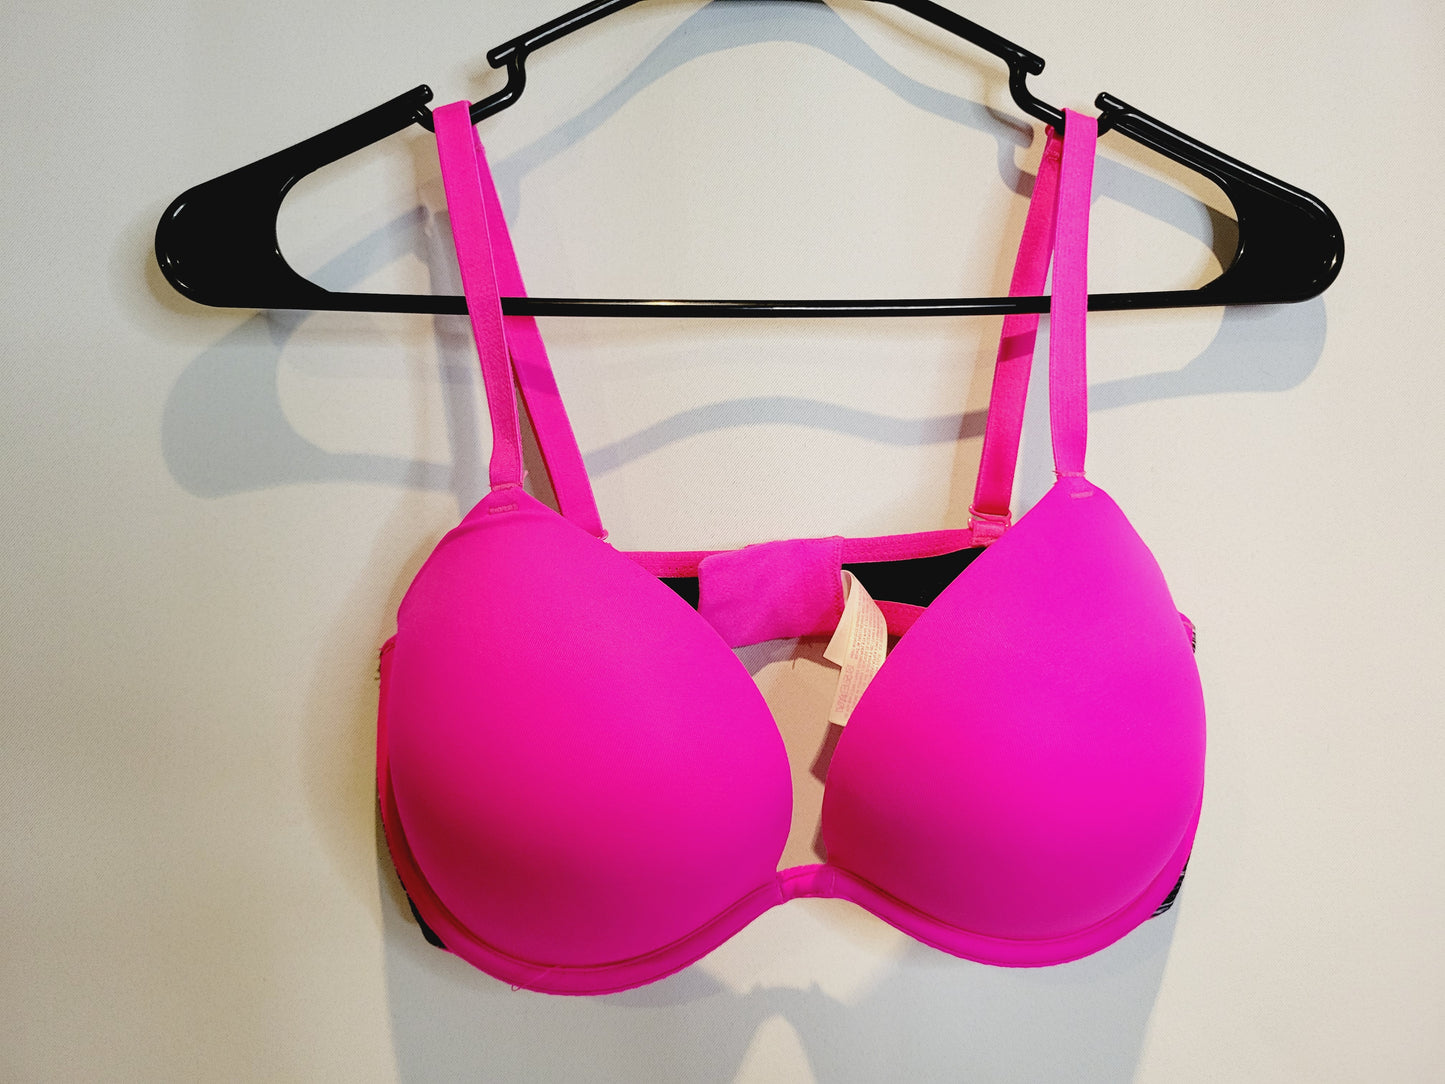 Victoria's secret pink everywhere Super push up bra size 40B VS New So Cute